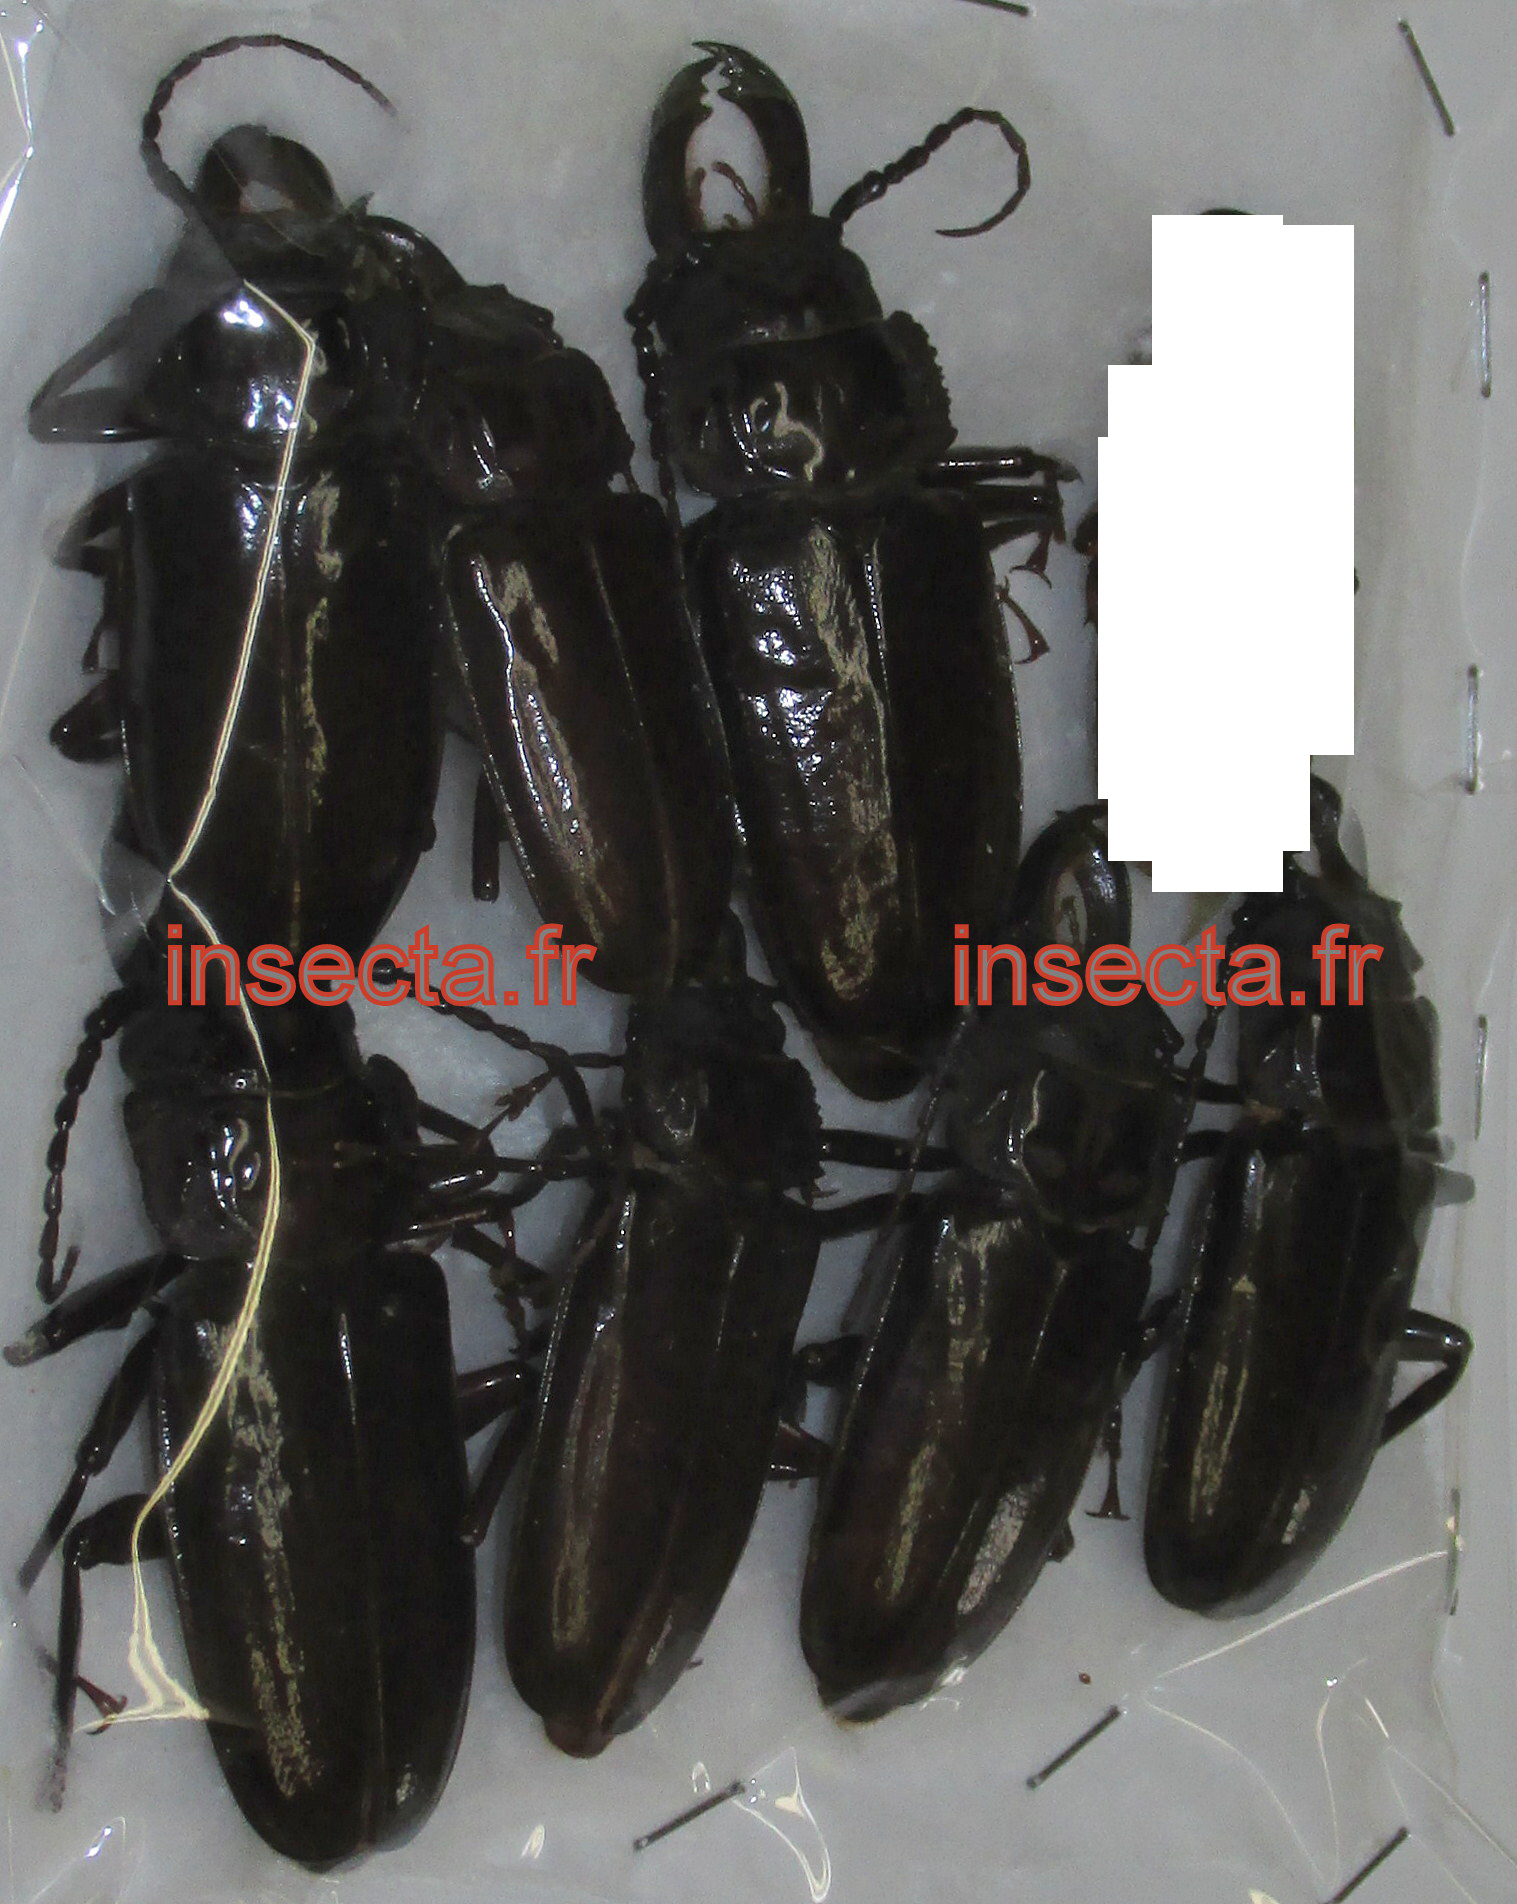 Mallodon (Stenodontes) downesi set 7 males A-